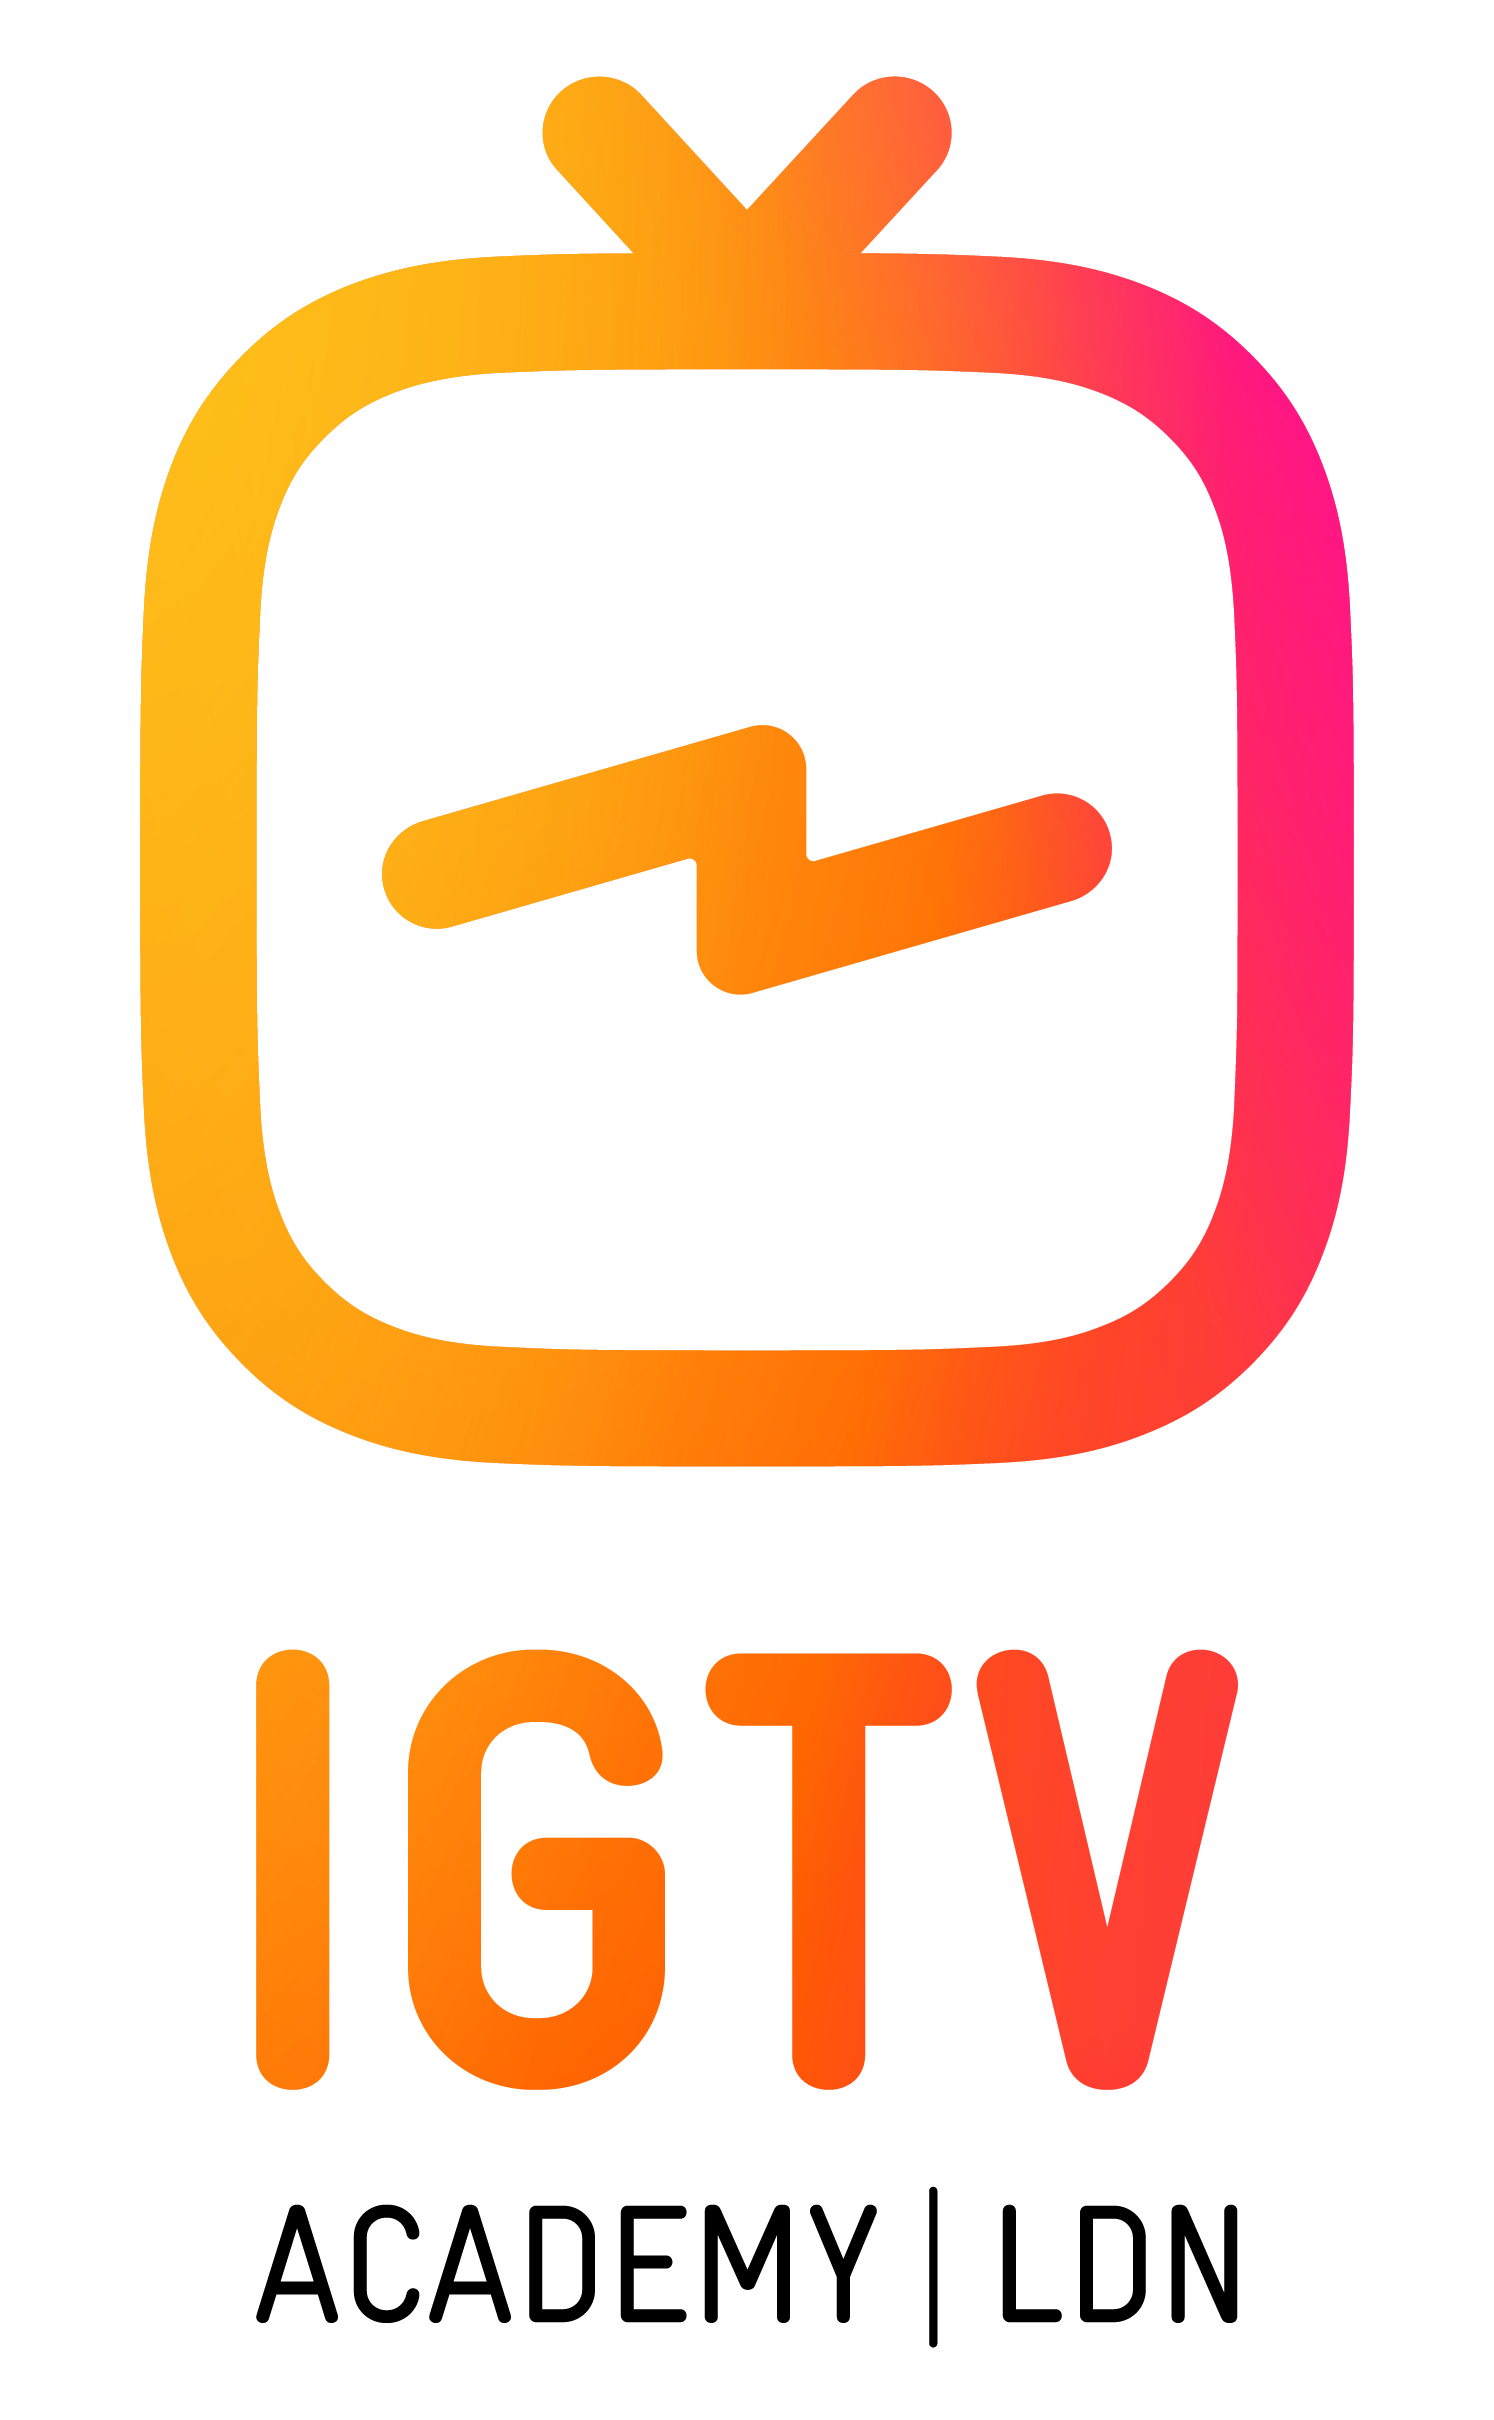 IGTV логотип значок PNG Image